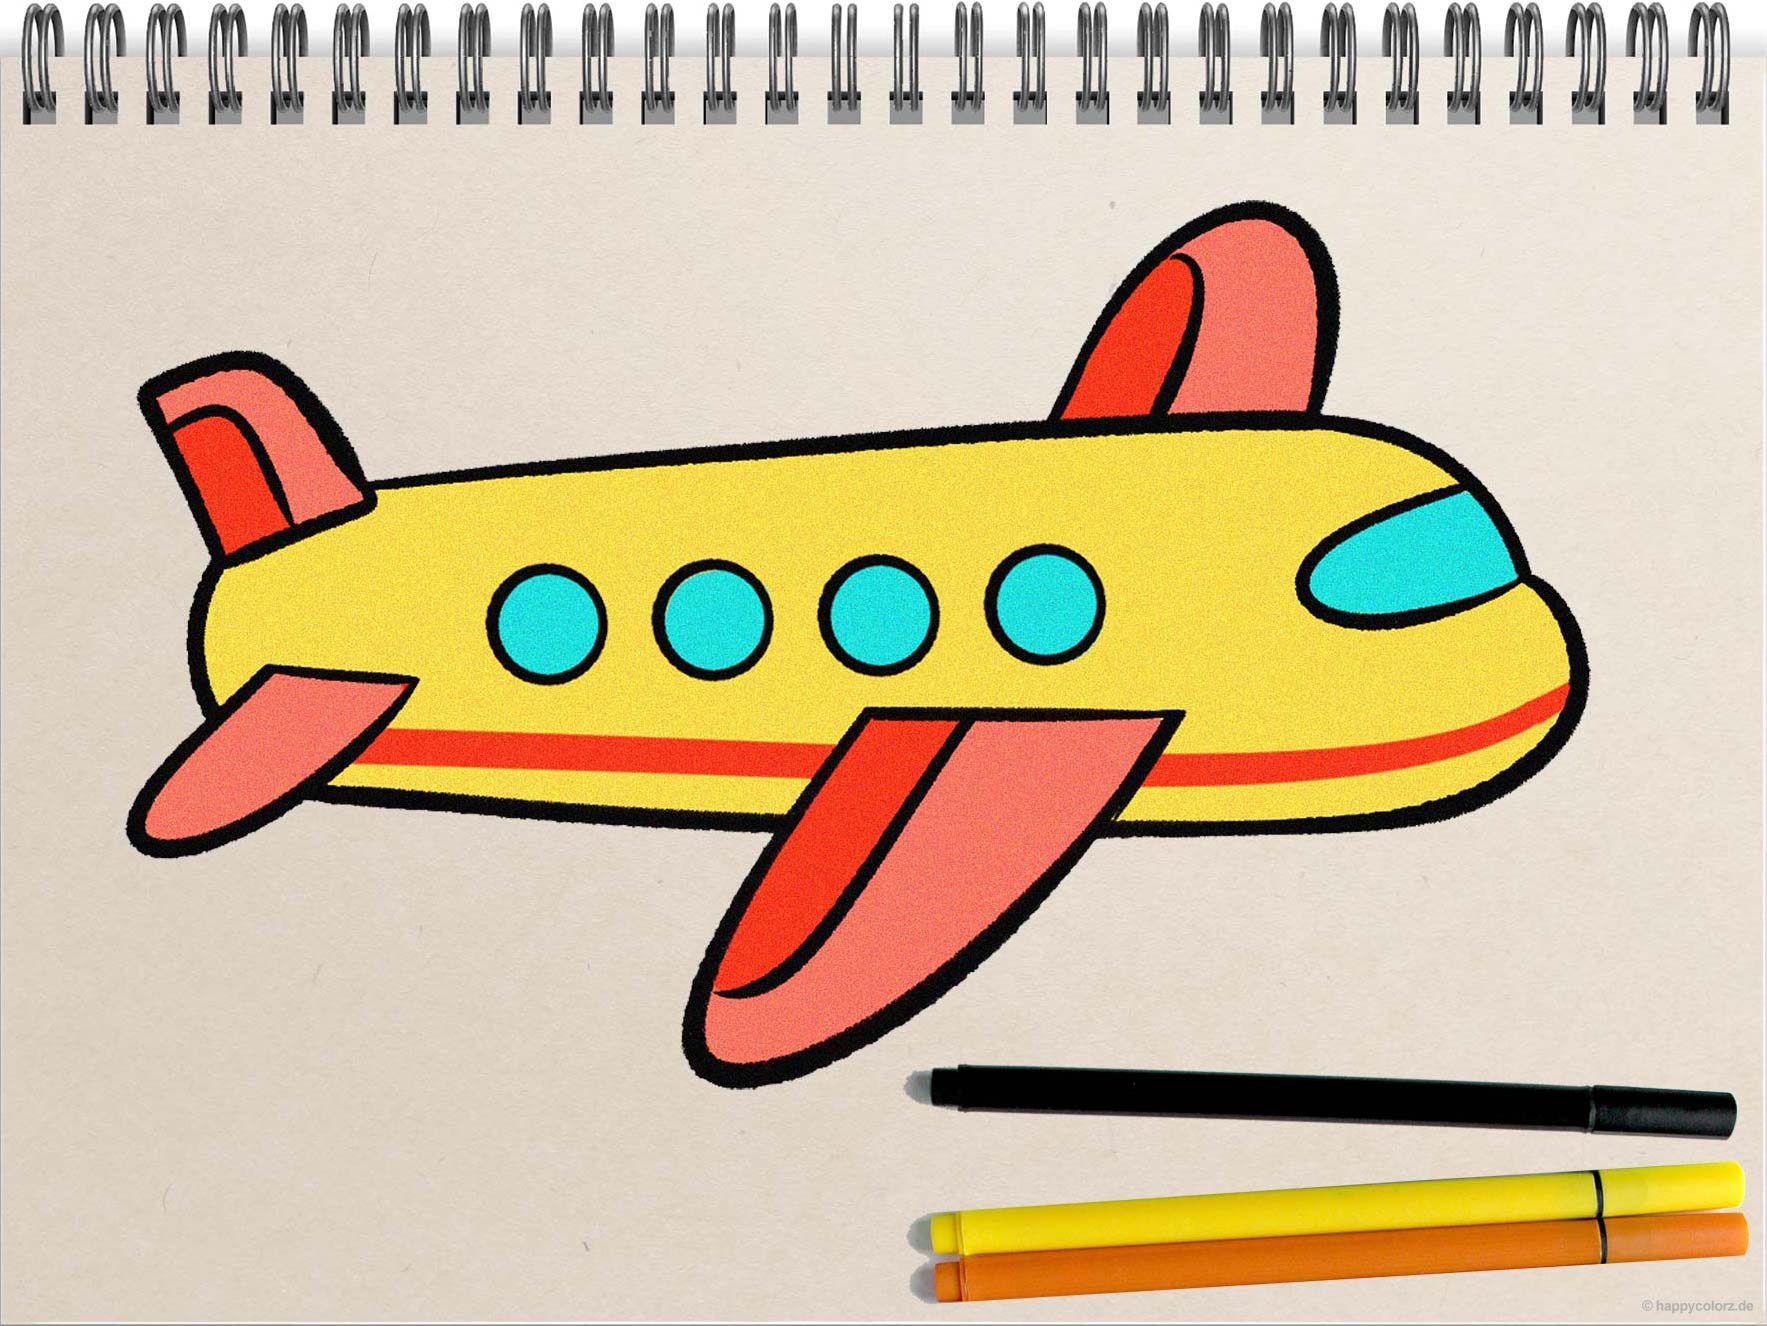 Flugzeug malen - Schritt für Schritt